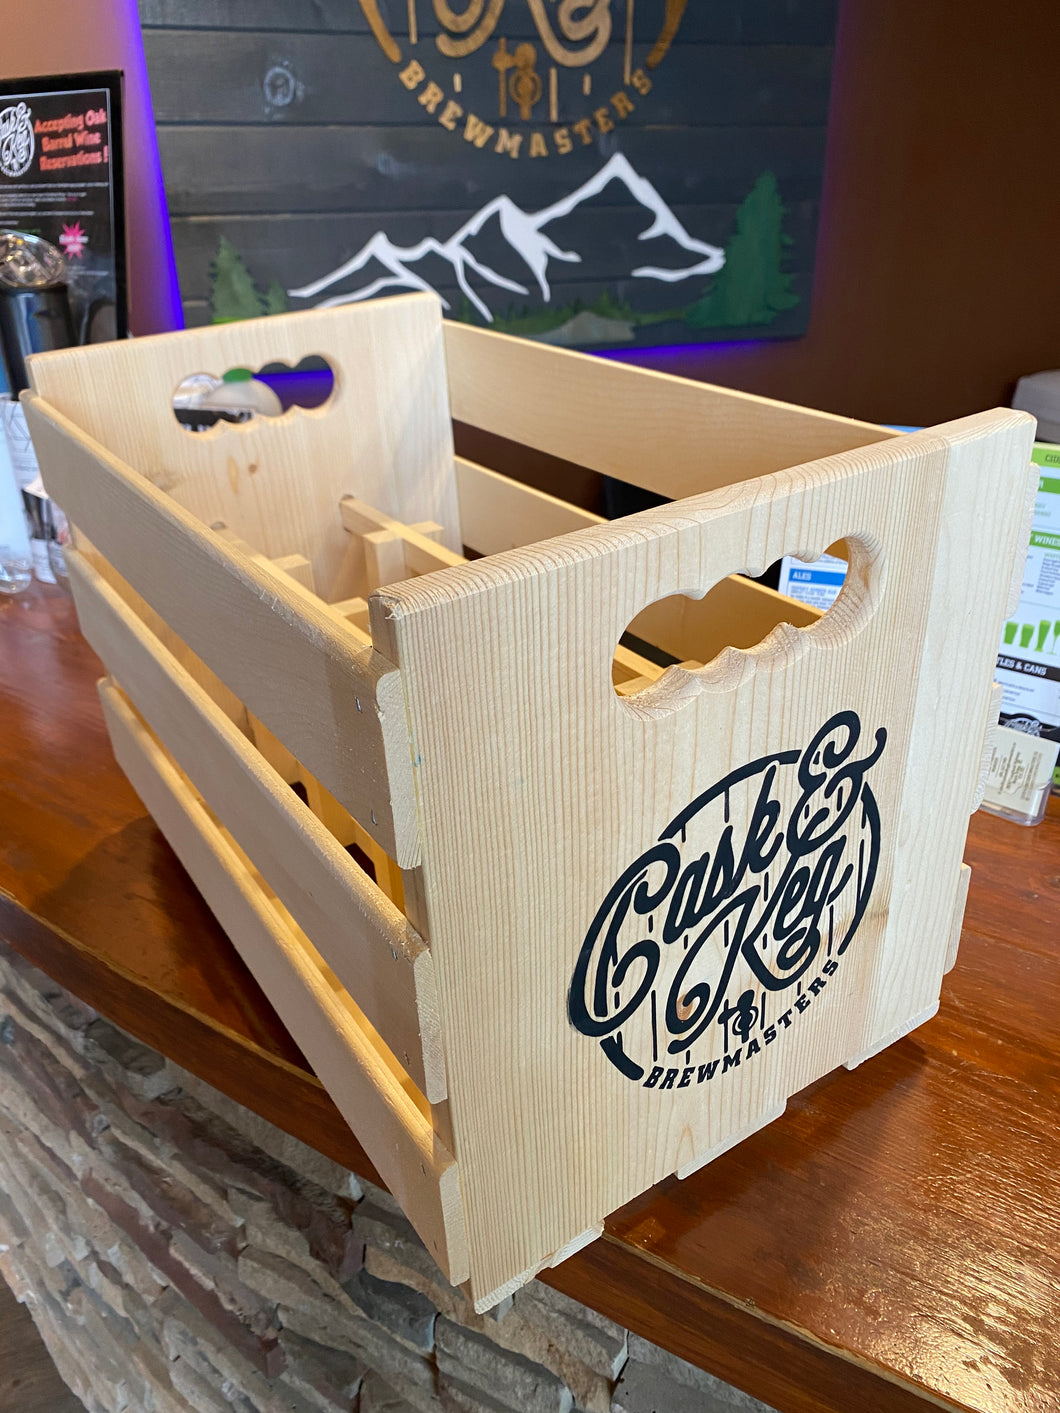 Wooden Wine Crate